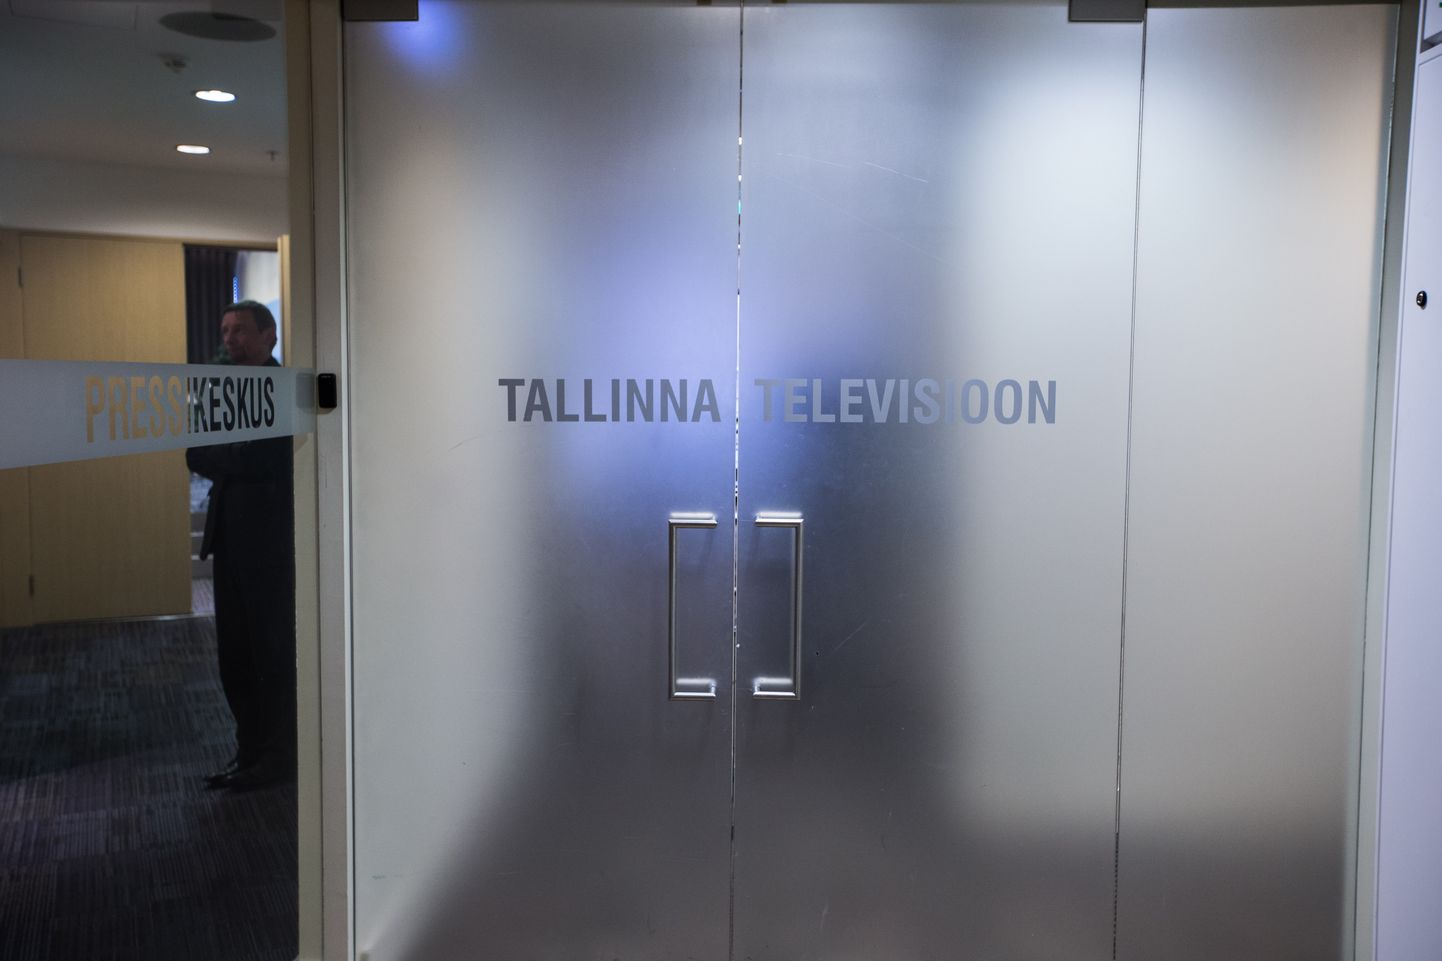 Tallinna televisioon.